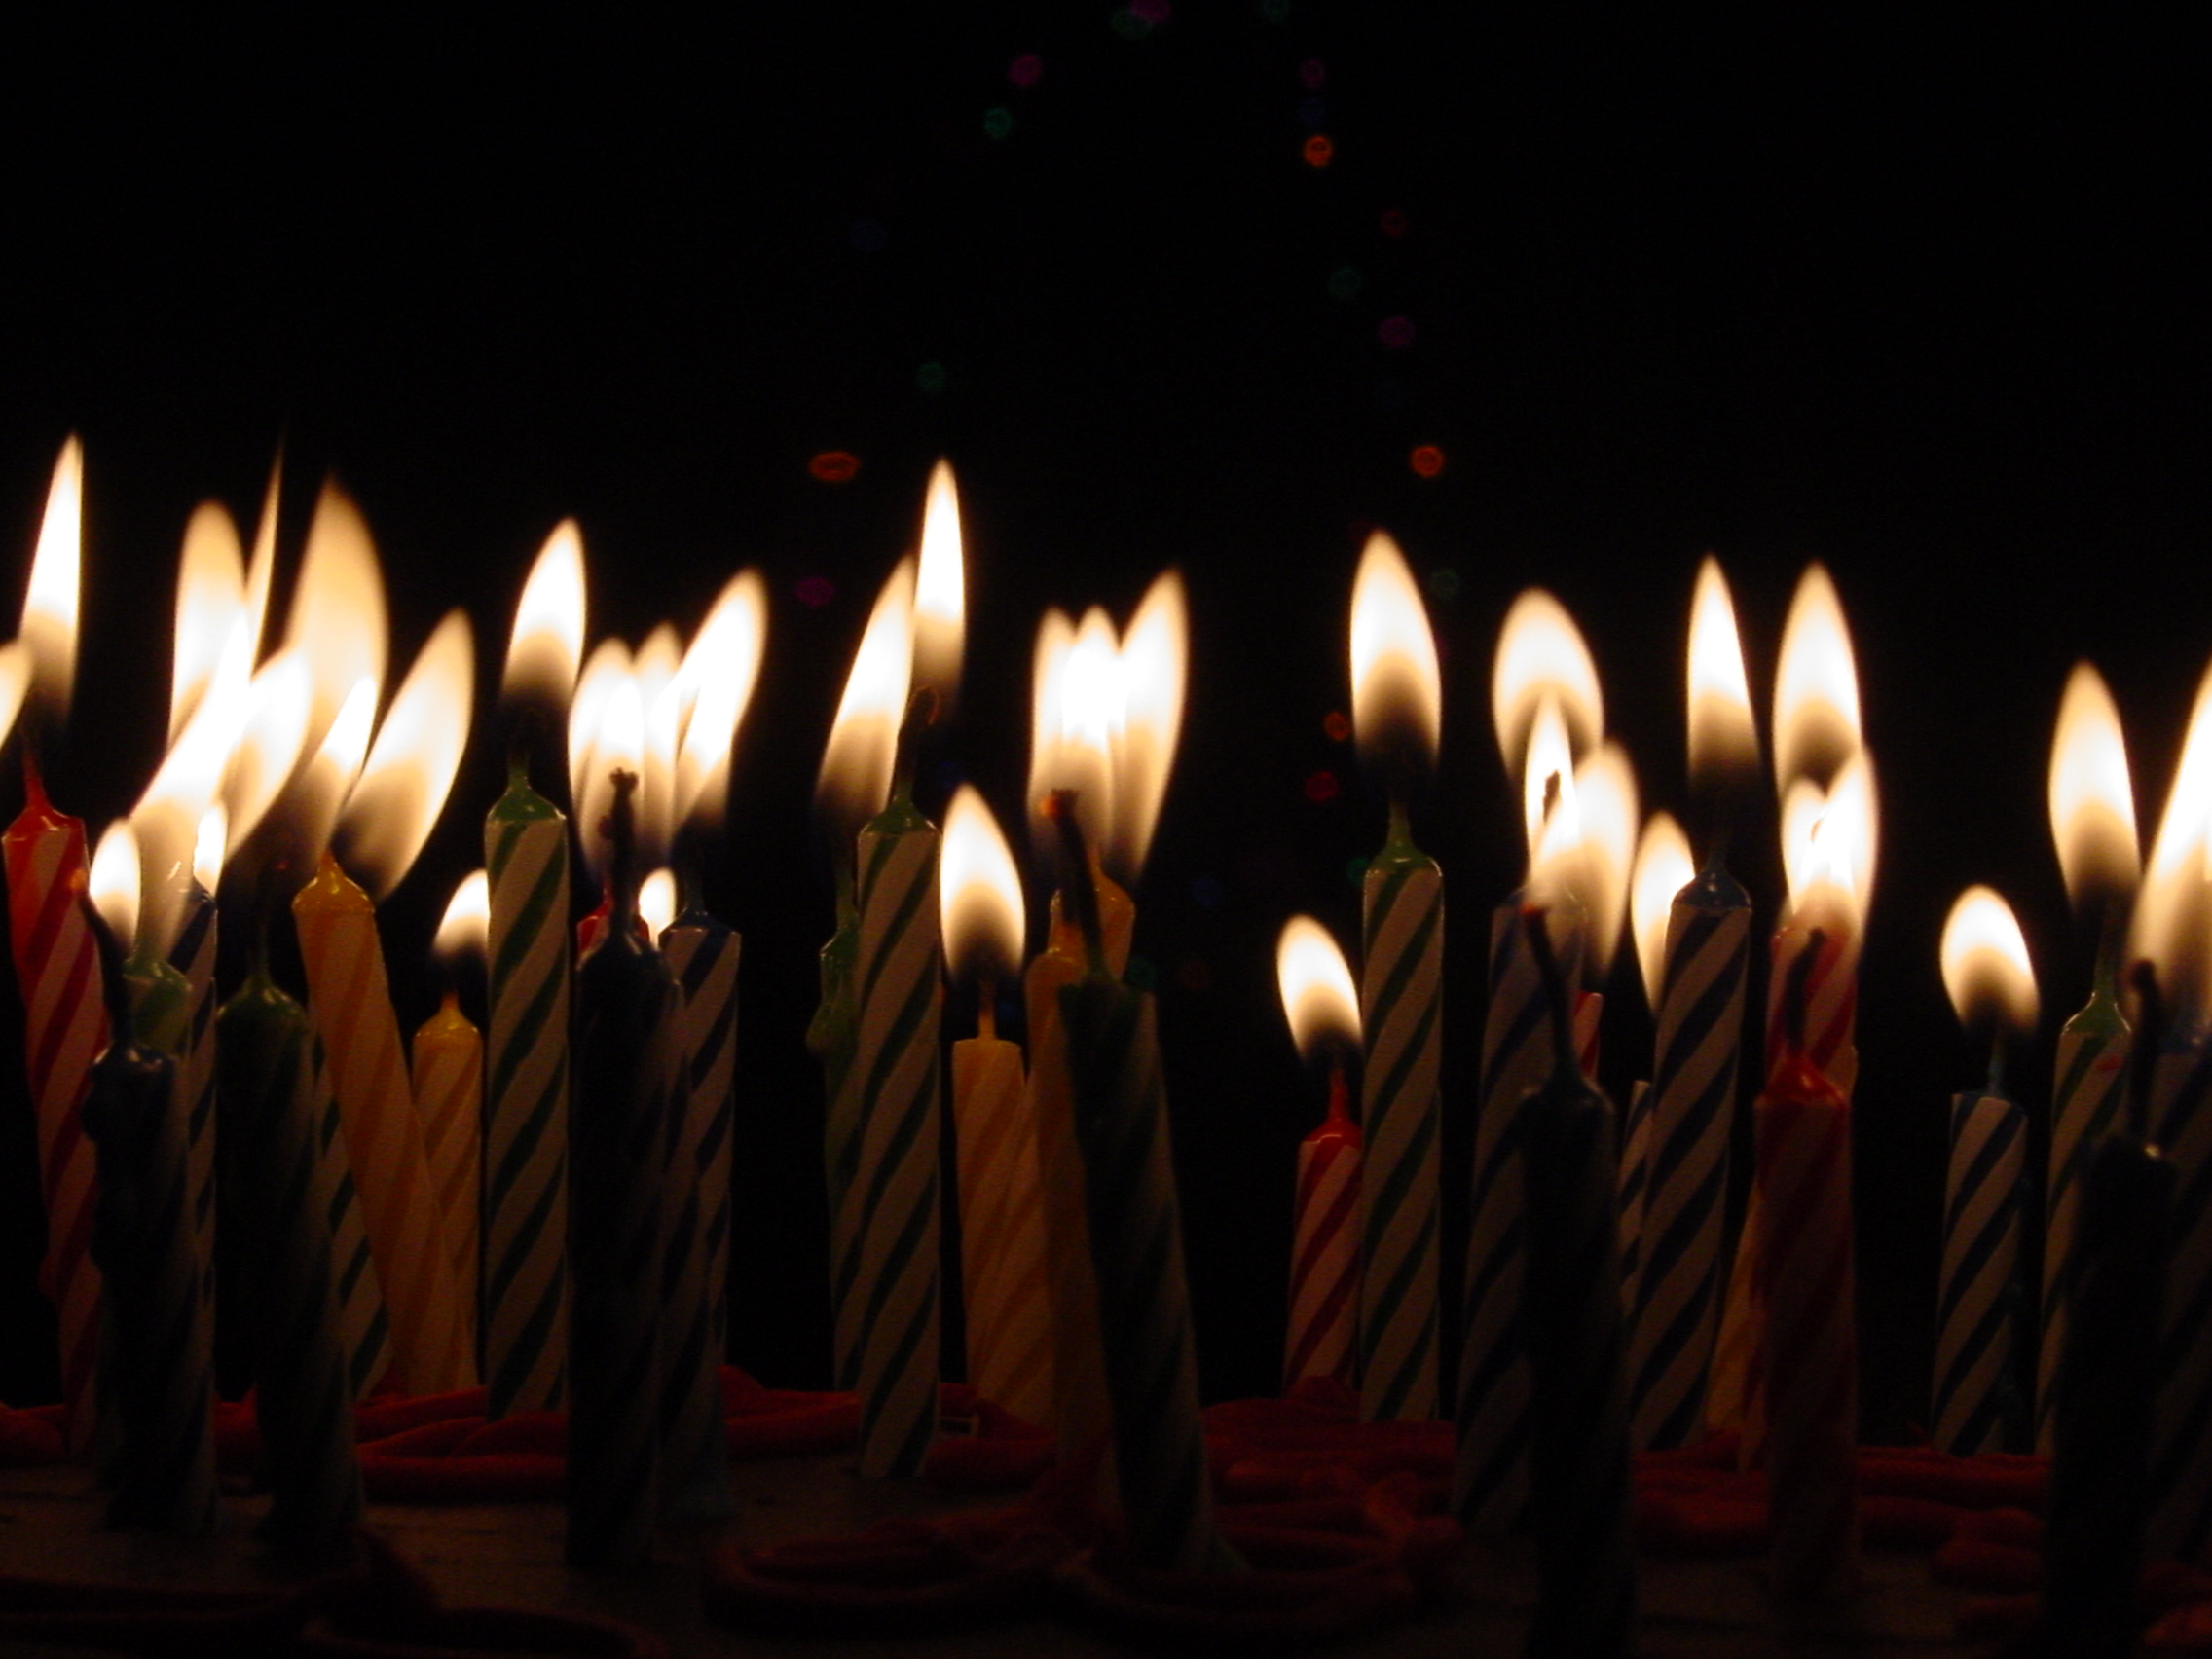 Amazing Happy Birthday Candle - HD Photos Gallery